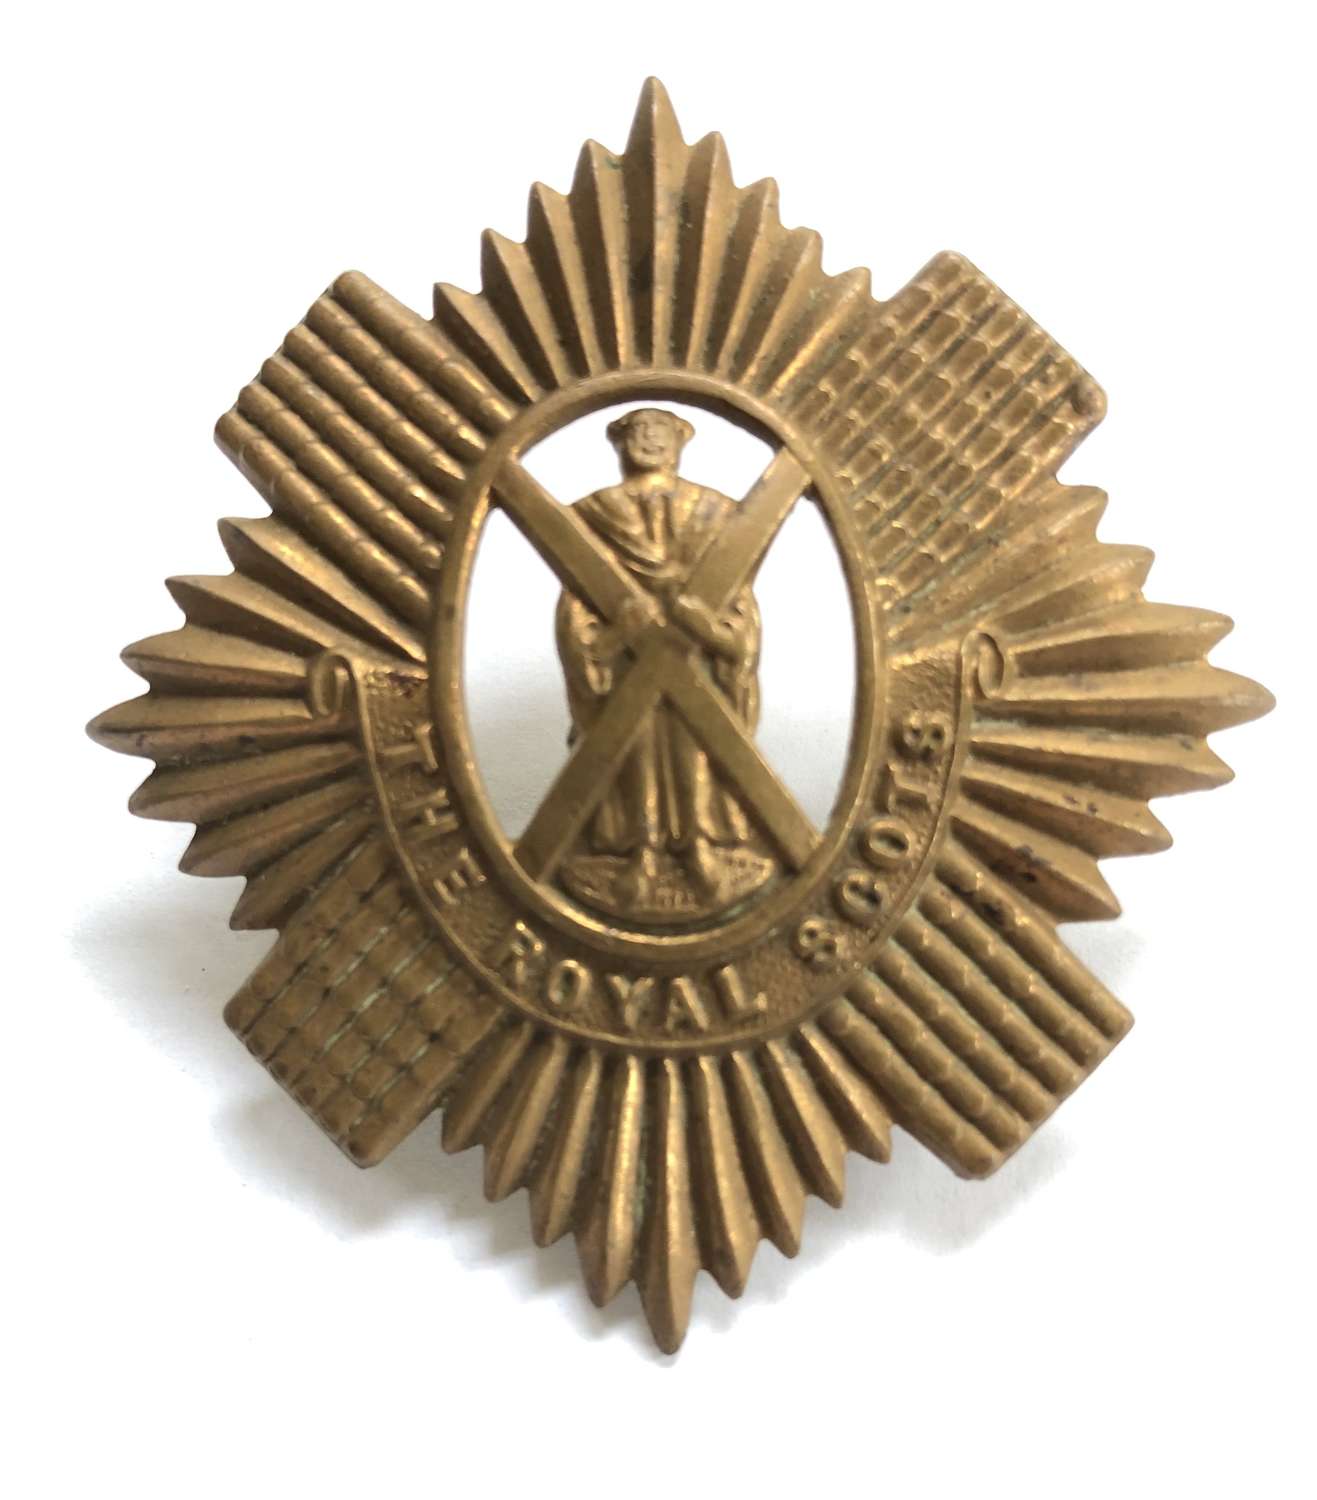 Royal Scots WW1 all brass economy glengarry badge circa 1916-18